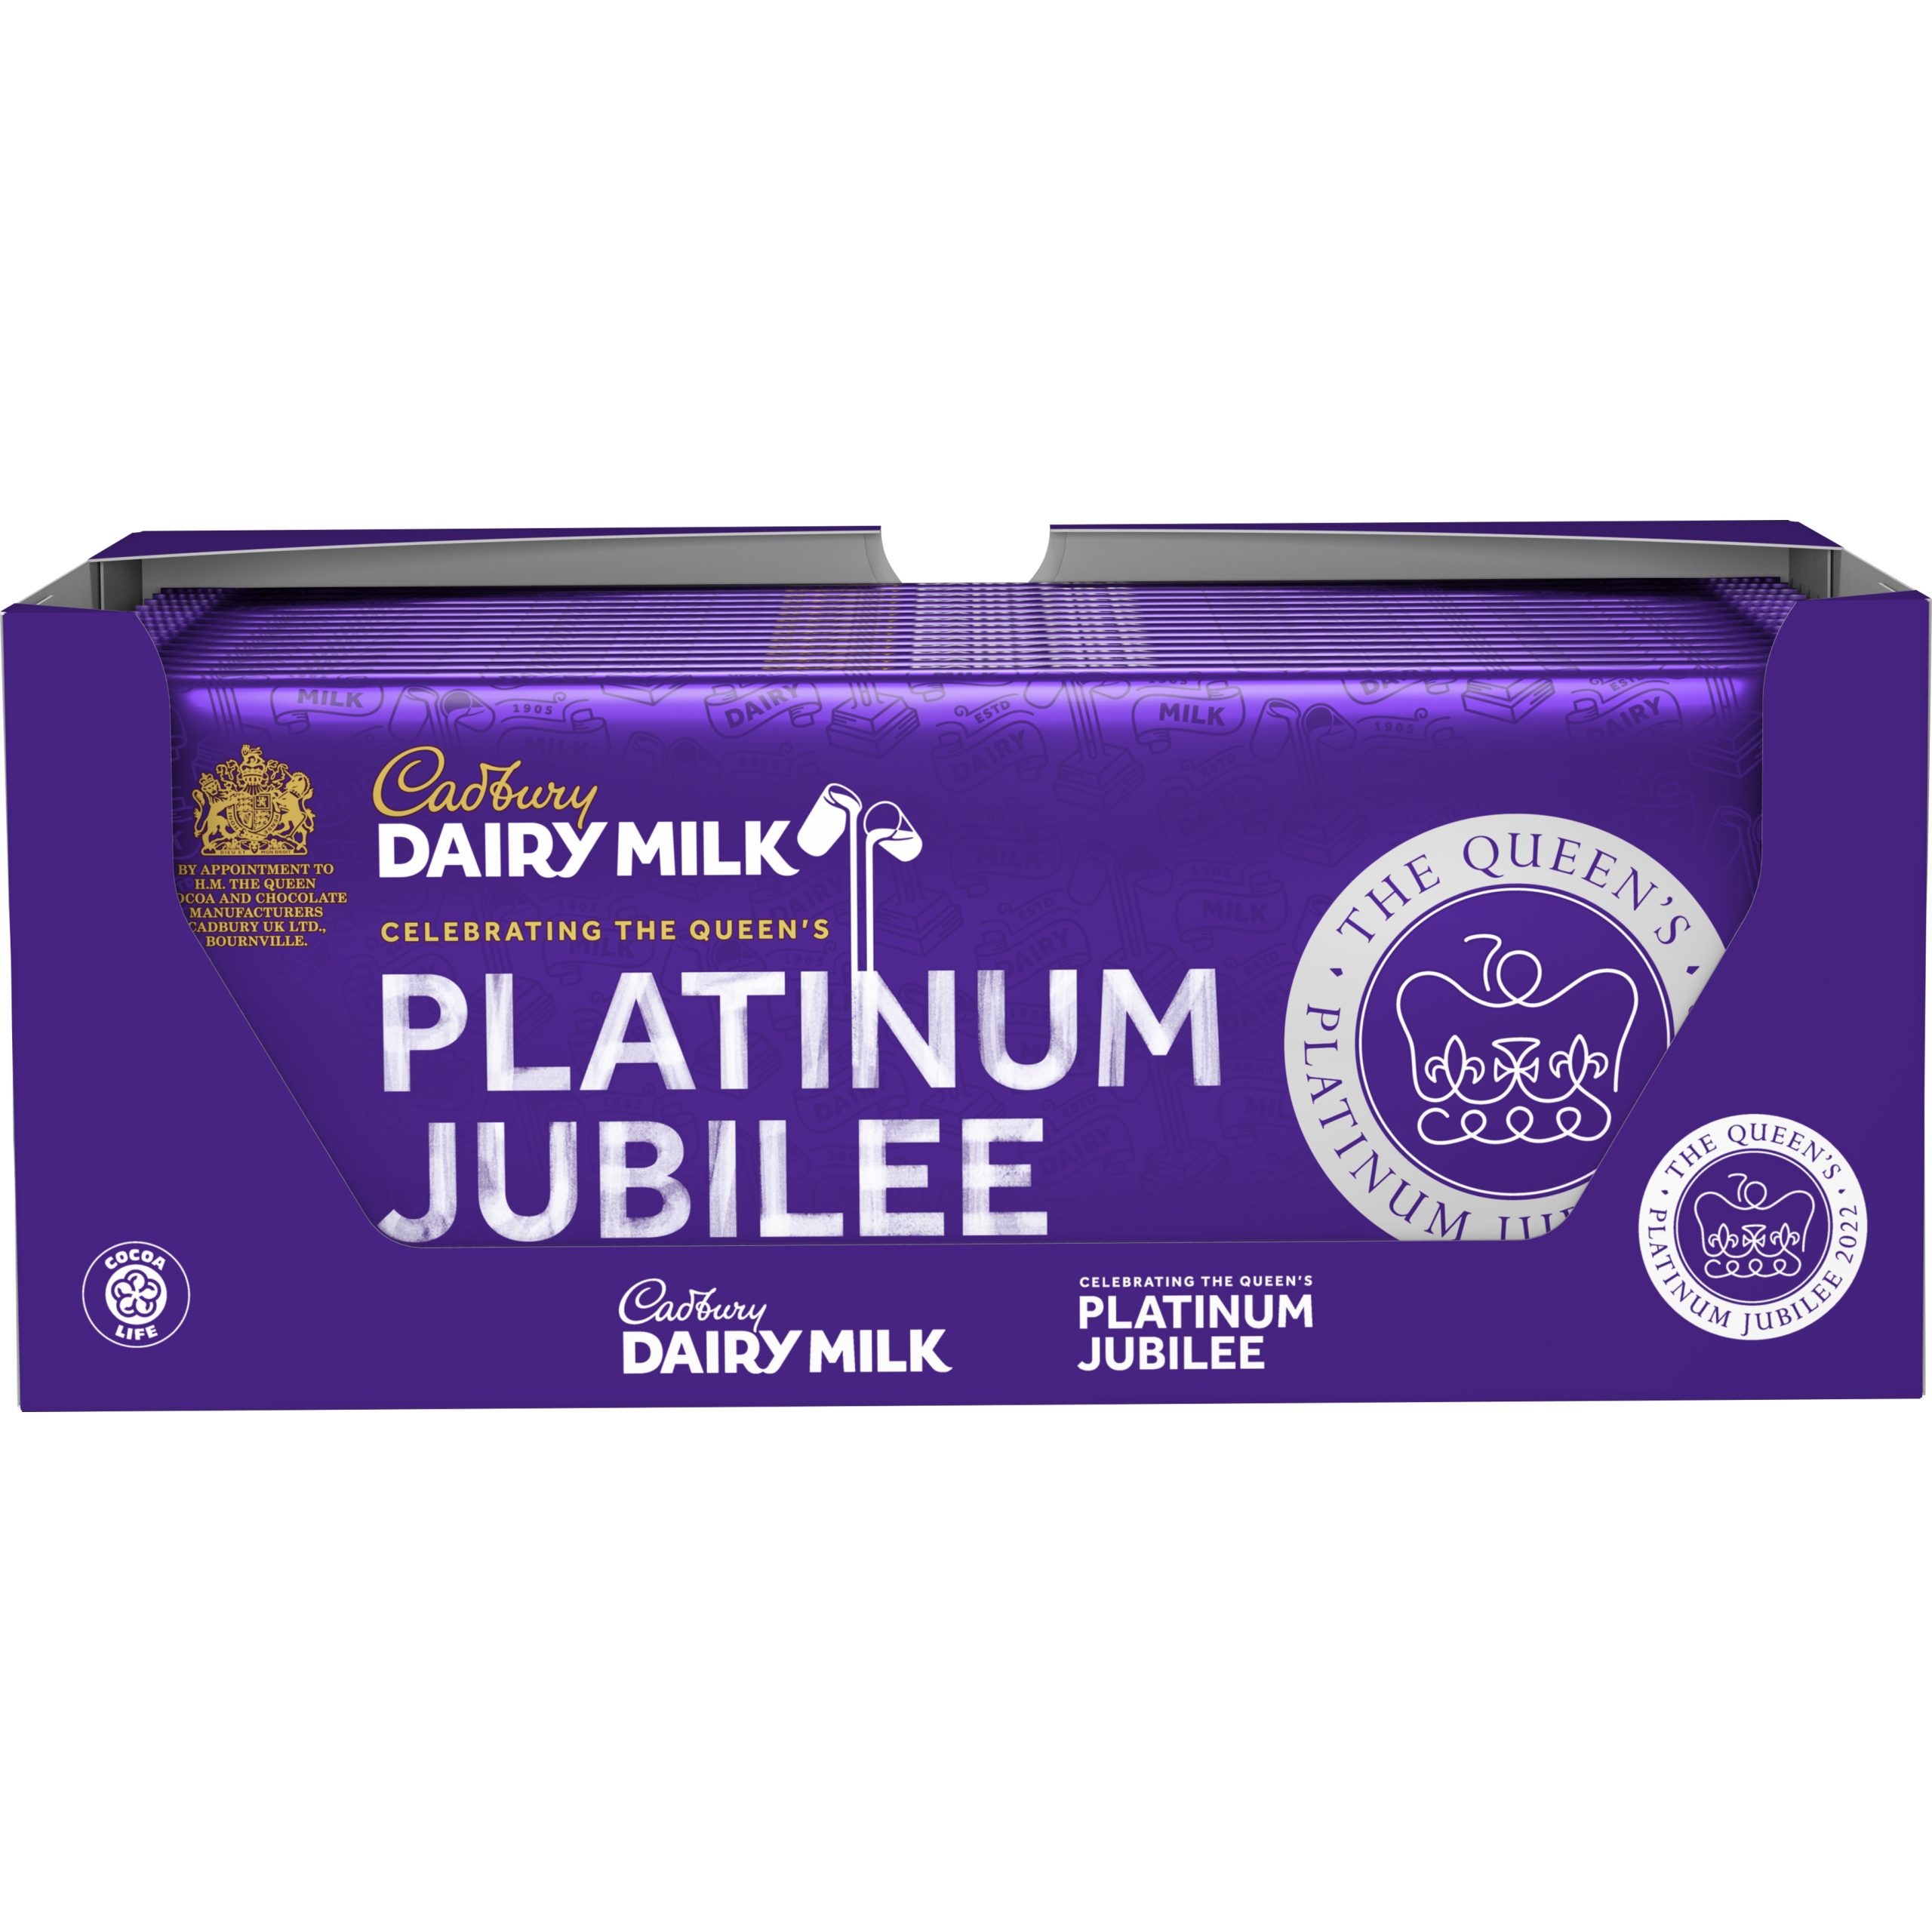 Cadbury rolls out Platinum Jubilee commemorative packs